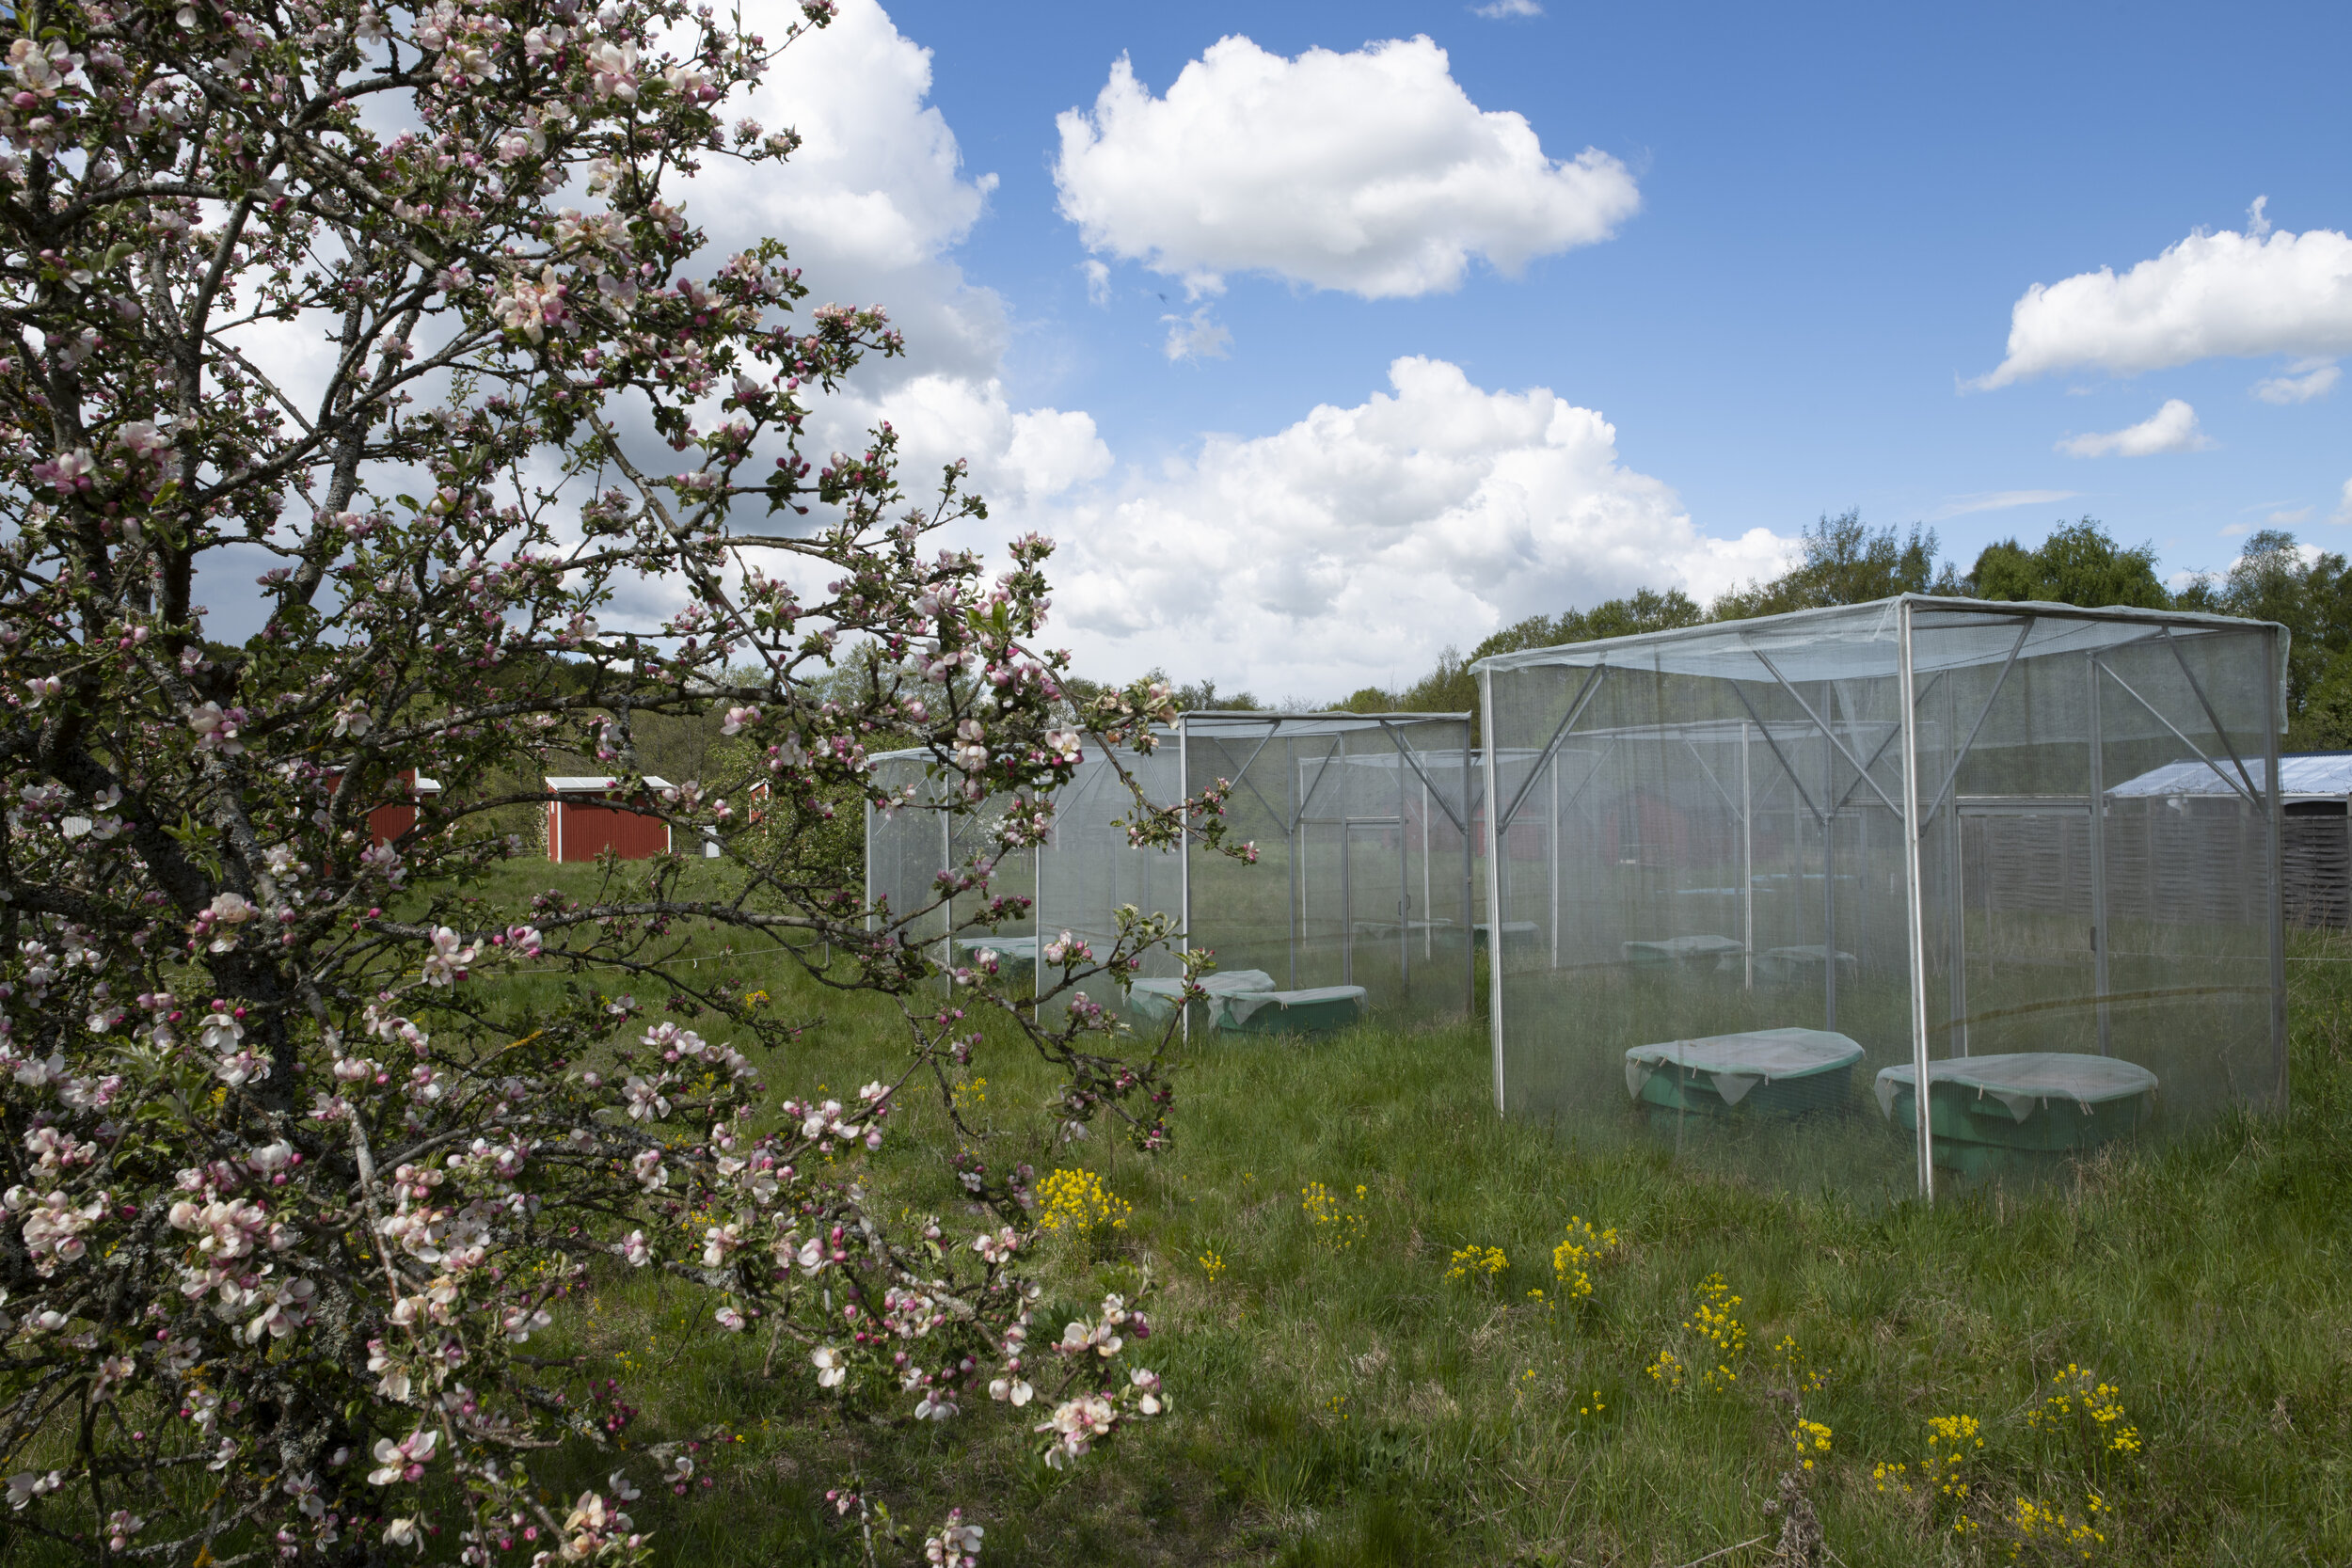  field enclosures at Stensoffa field station, Sweden 